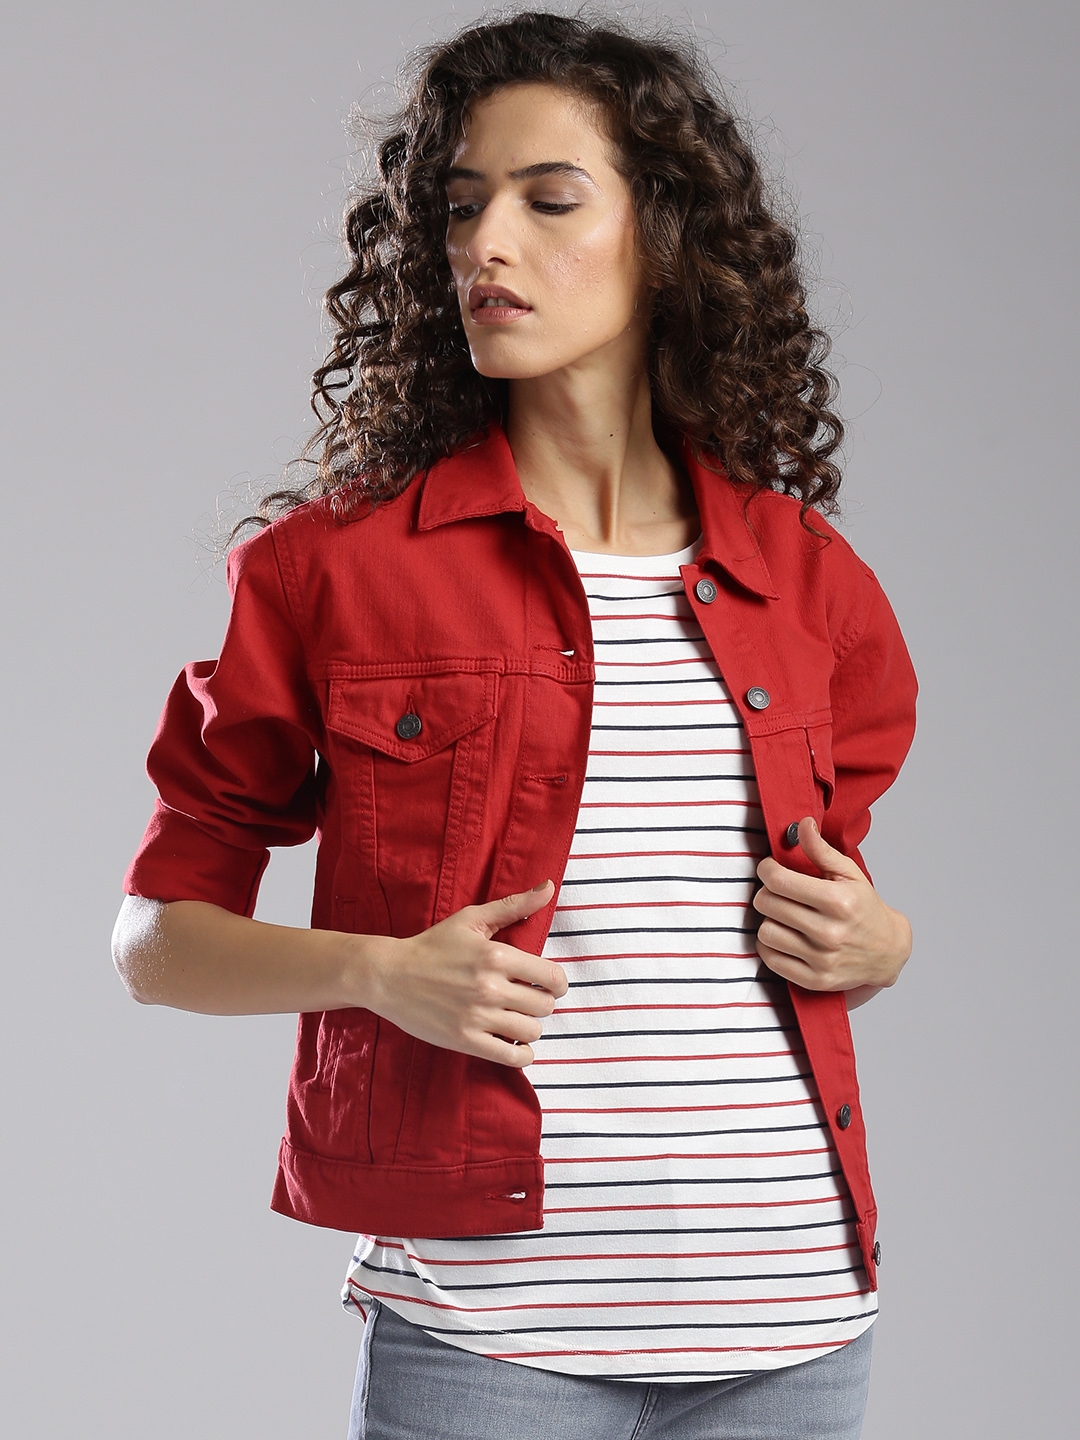 Levi's Red Denim Jacket Womens Wholesale Price, Save 47% | idiomas.to ...